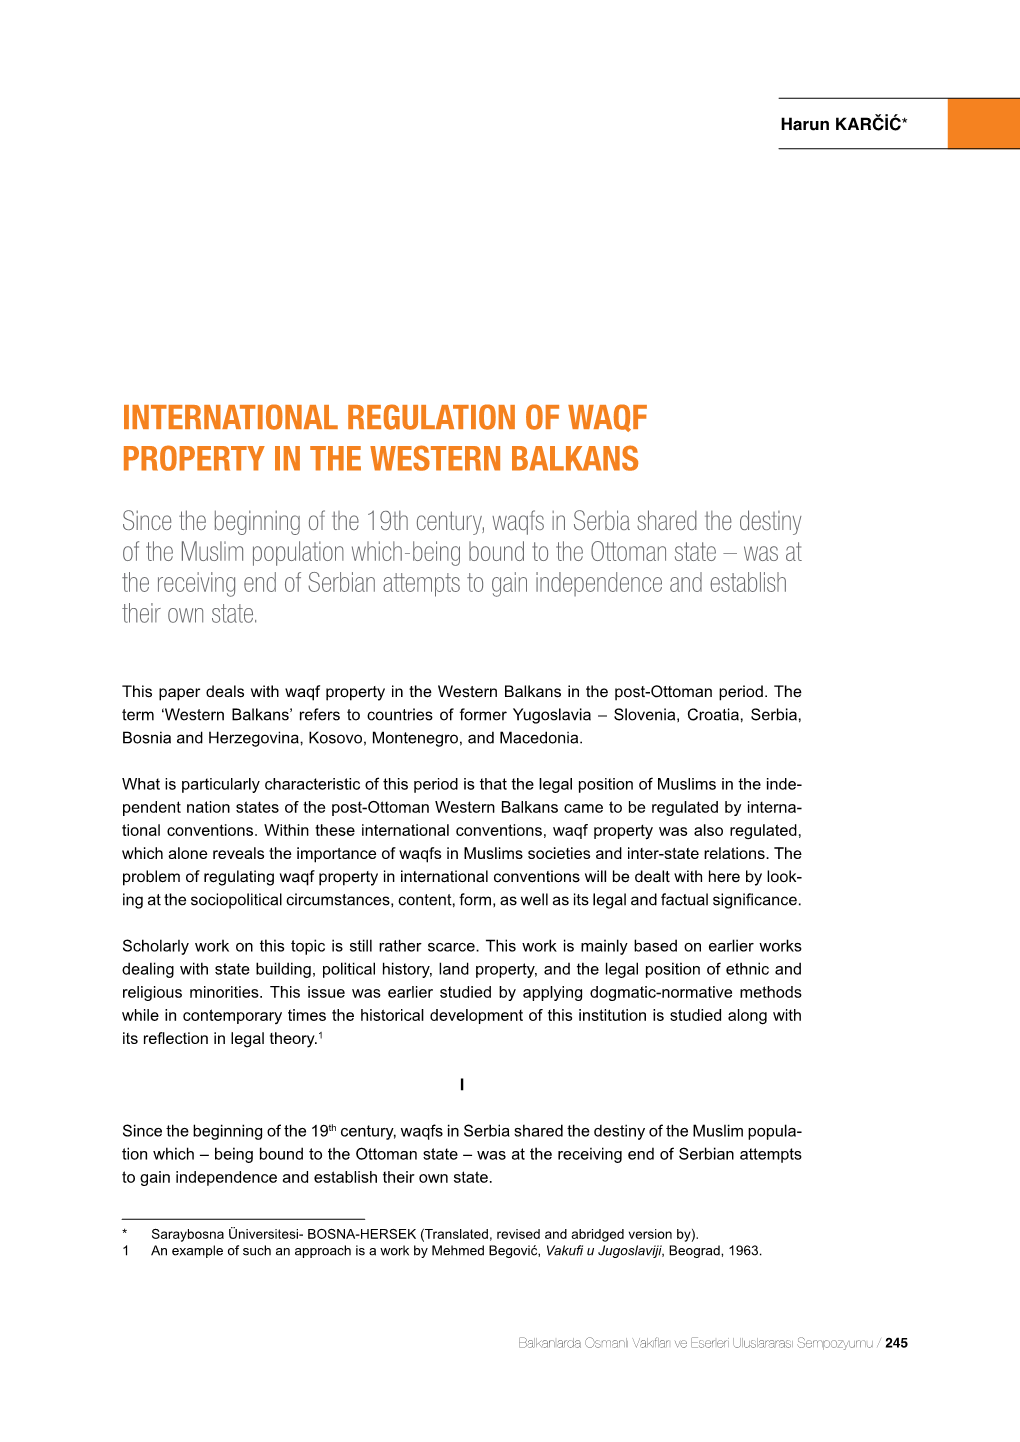 International Regulation of Waqf Property in the Western Balkans